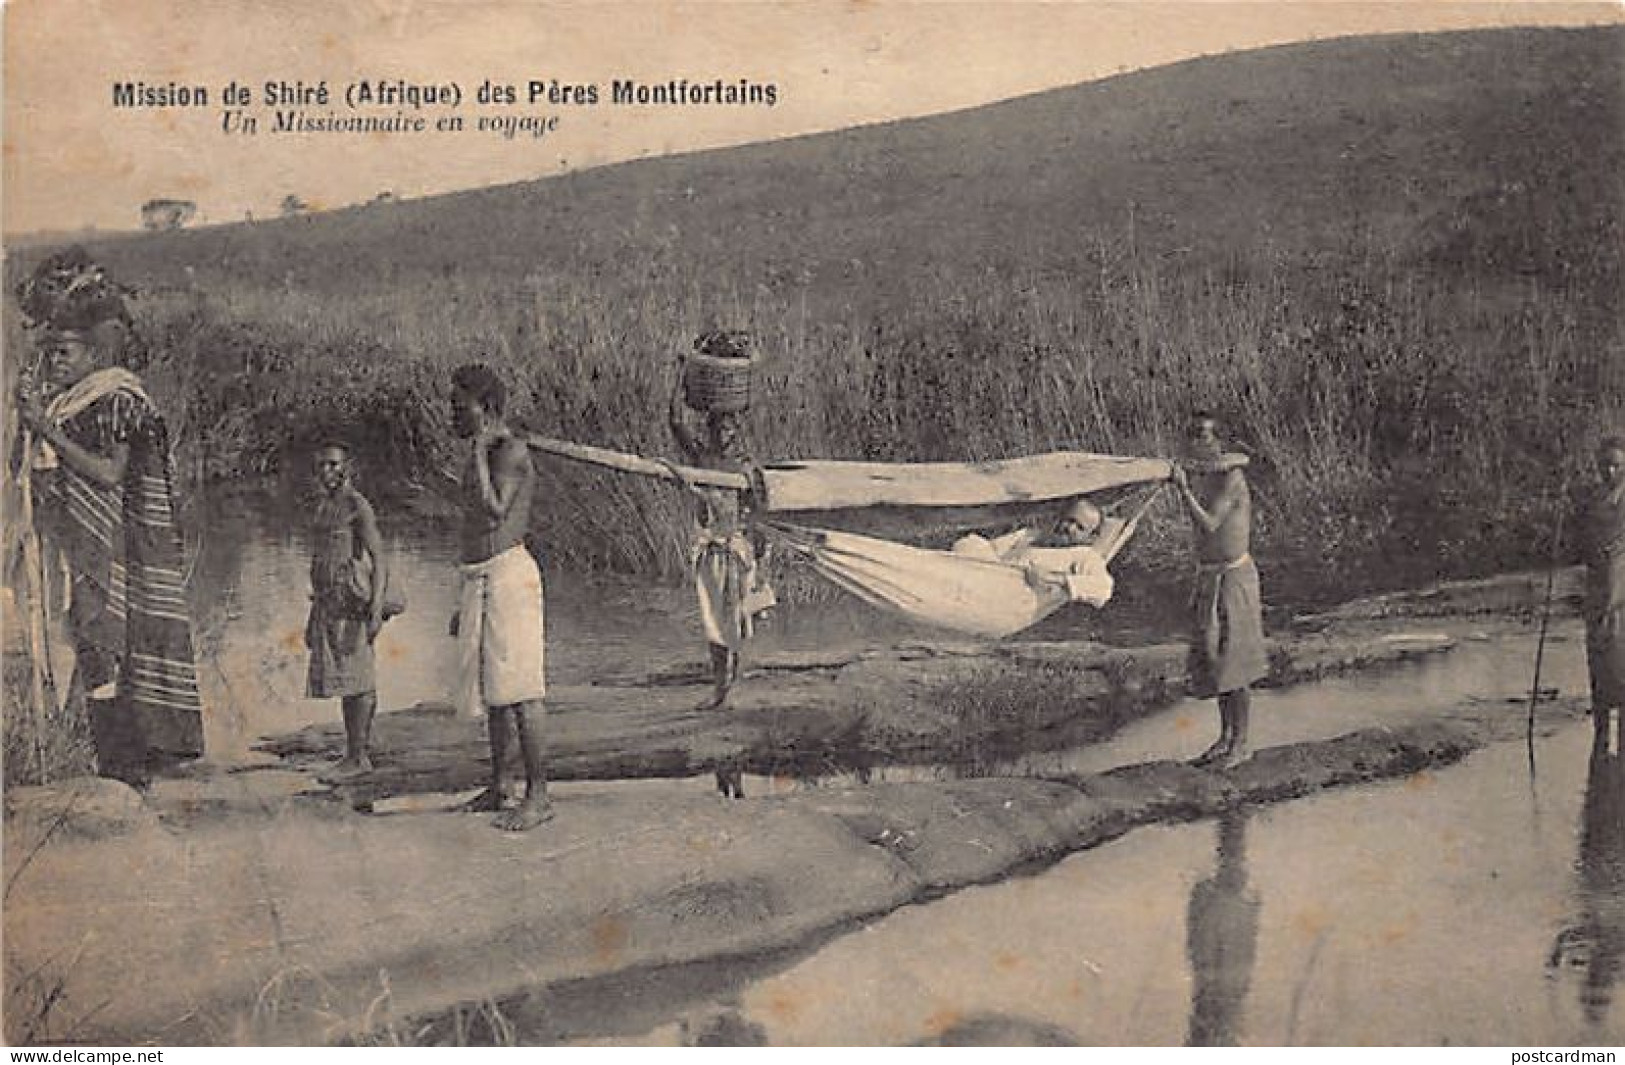 Malawi - A Missionary On A Journey - Hammock Chair - Publ. Company Of Mary - Mission Du Shiré Des Pères Montfortains - Malawi